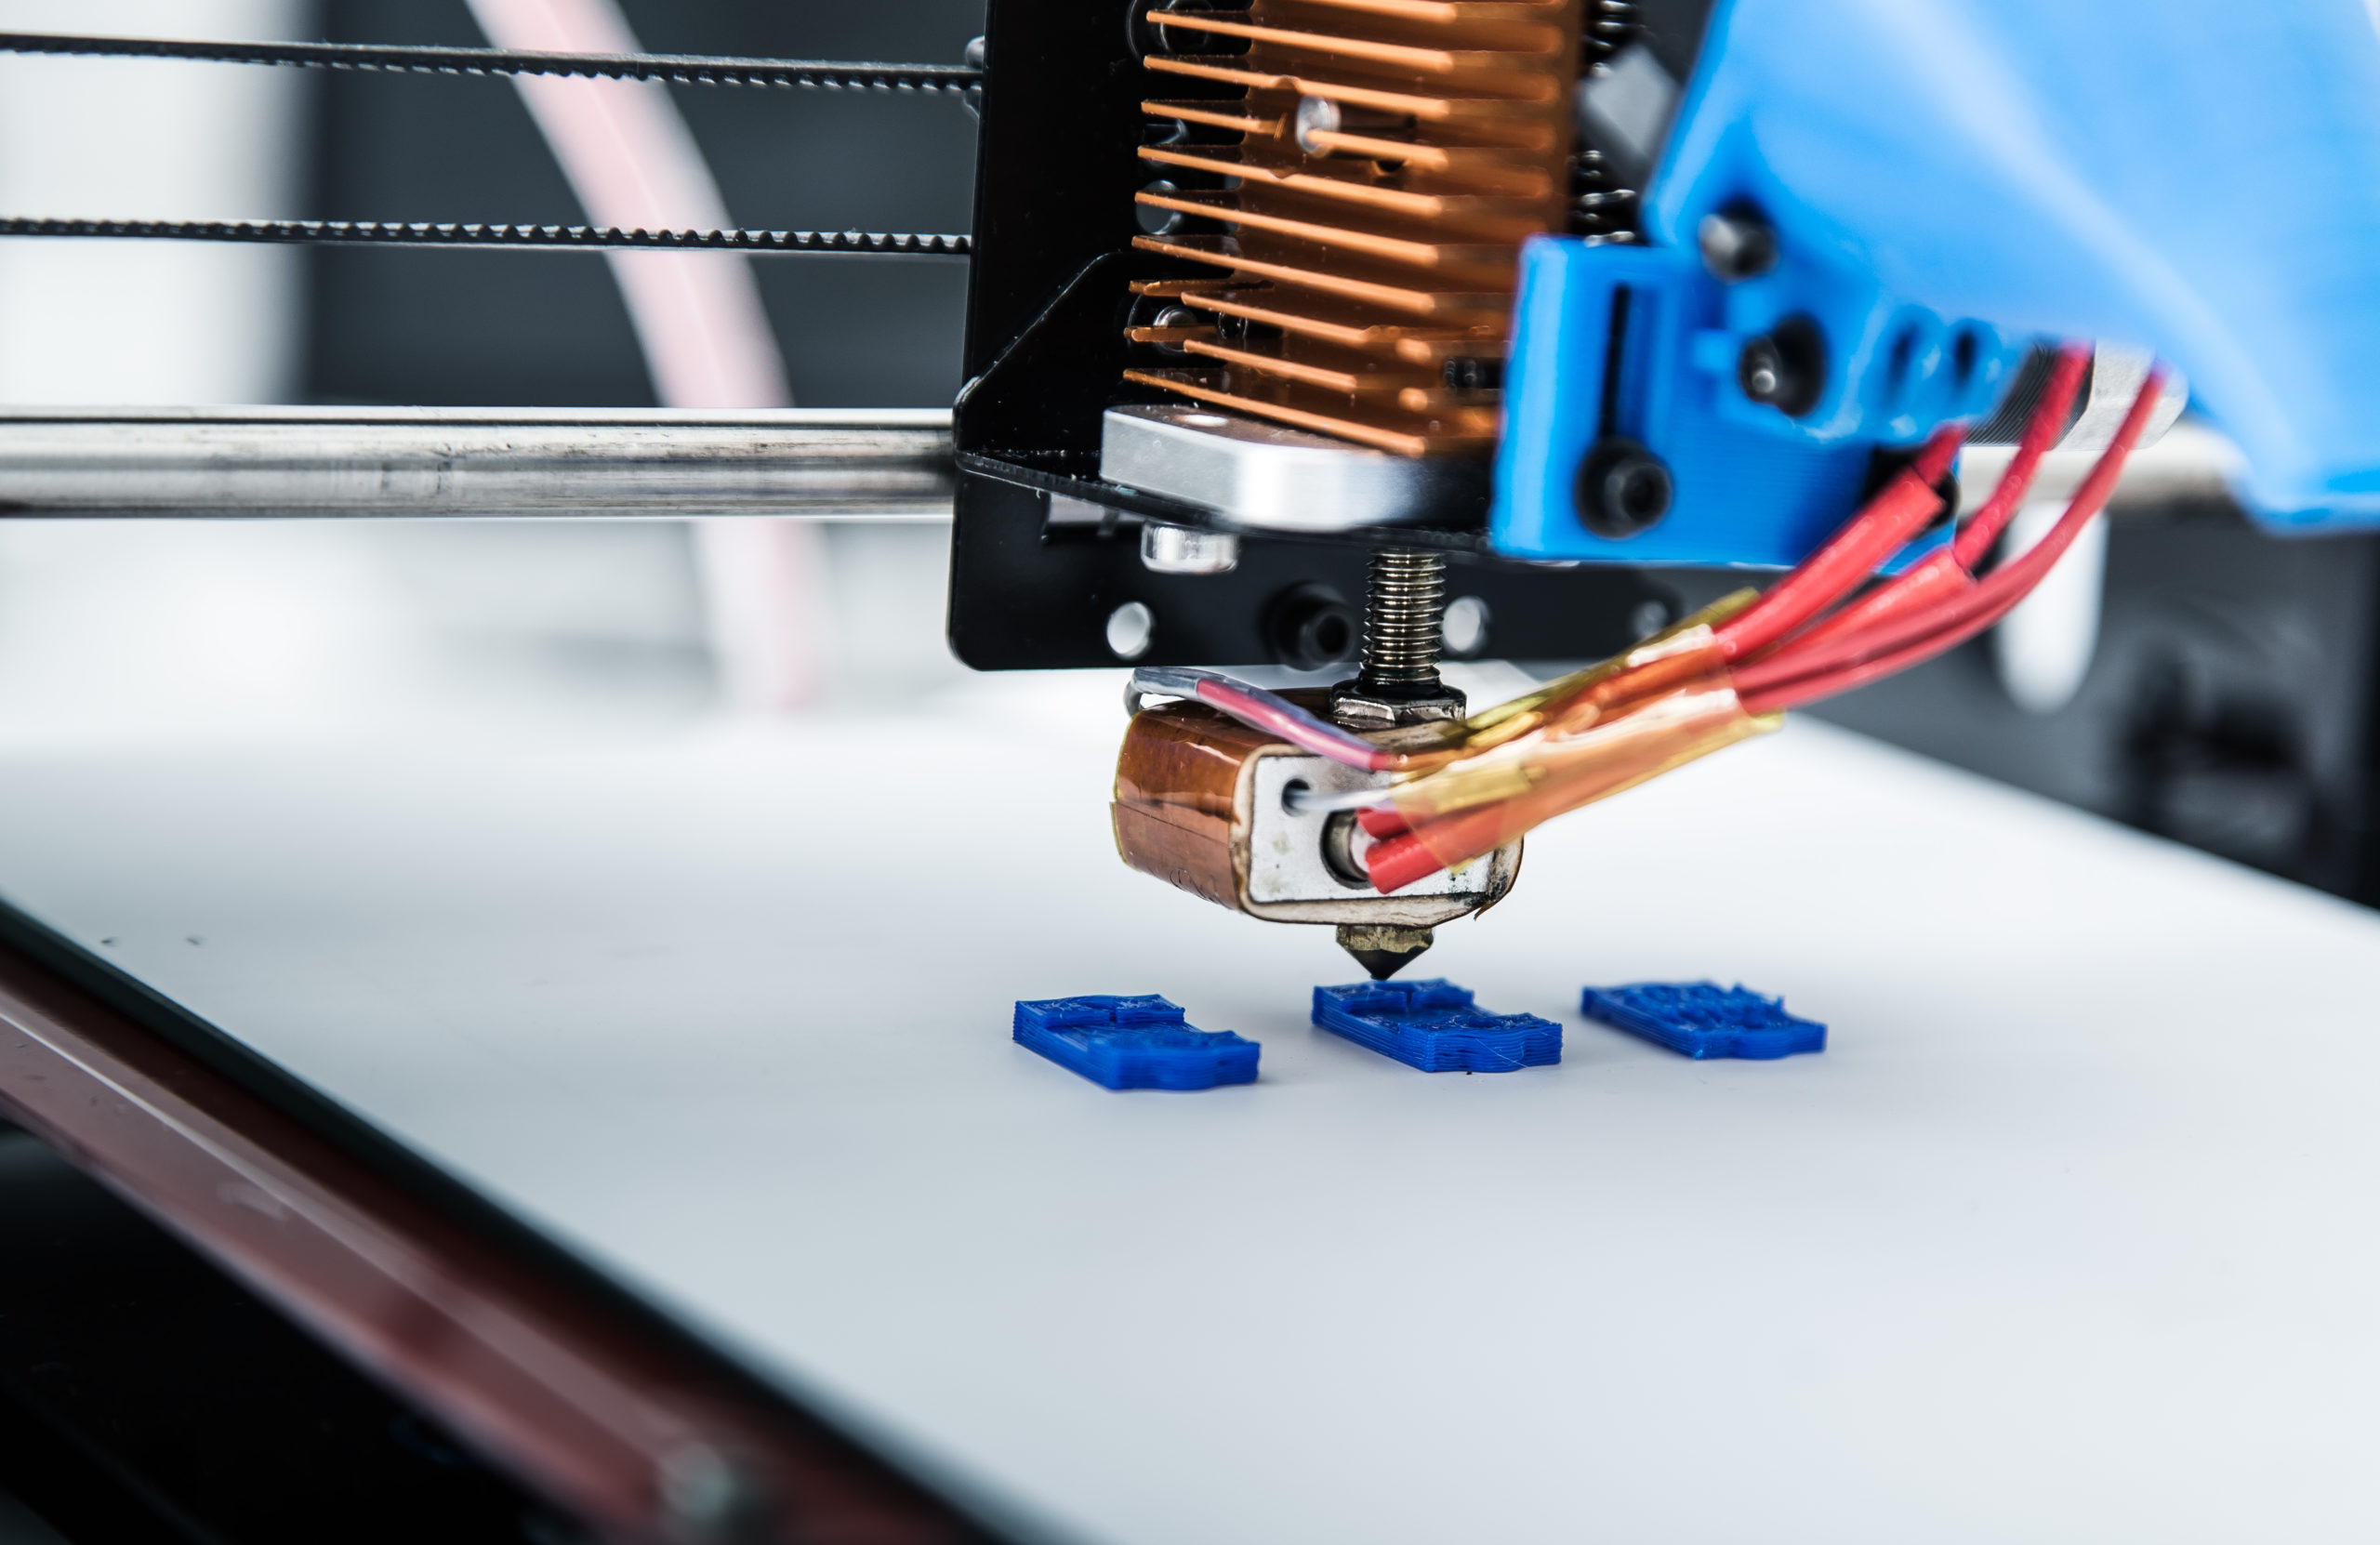 CNC Machining vs. 3D Printing for Prototyping